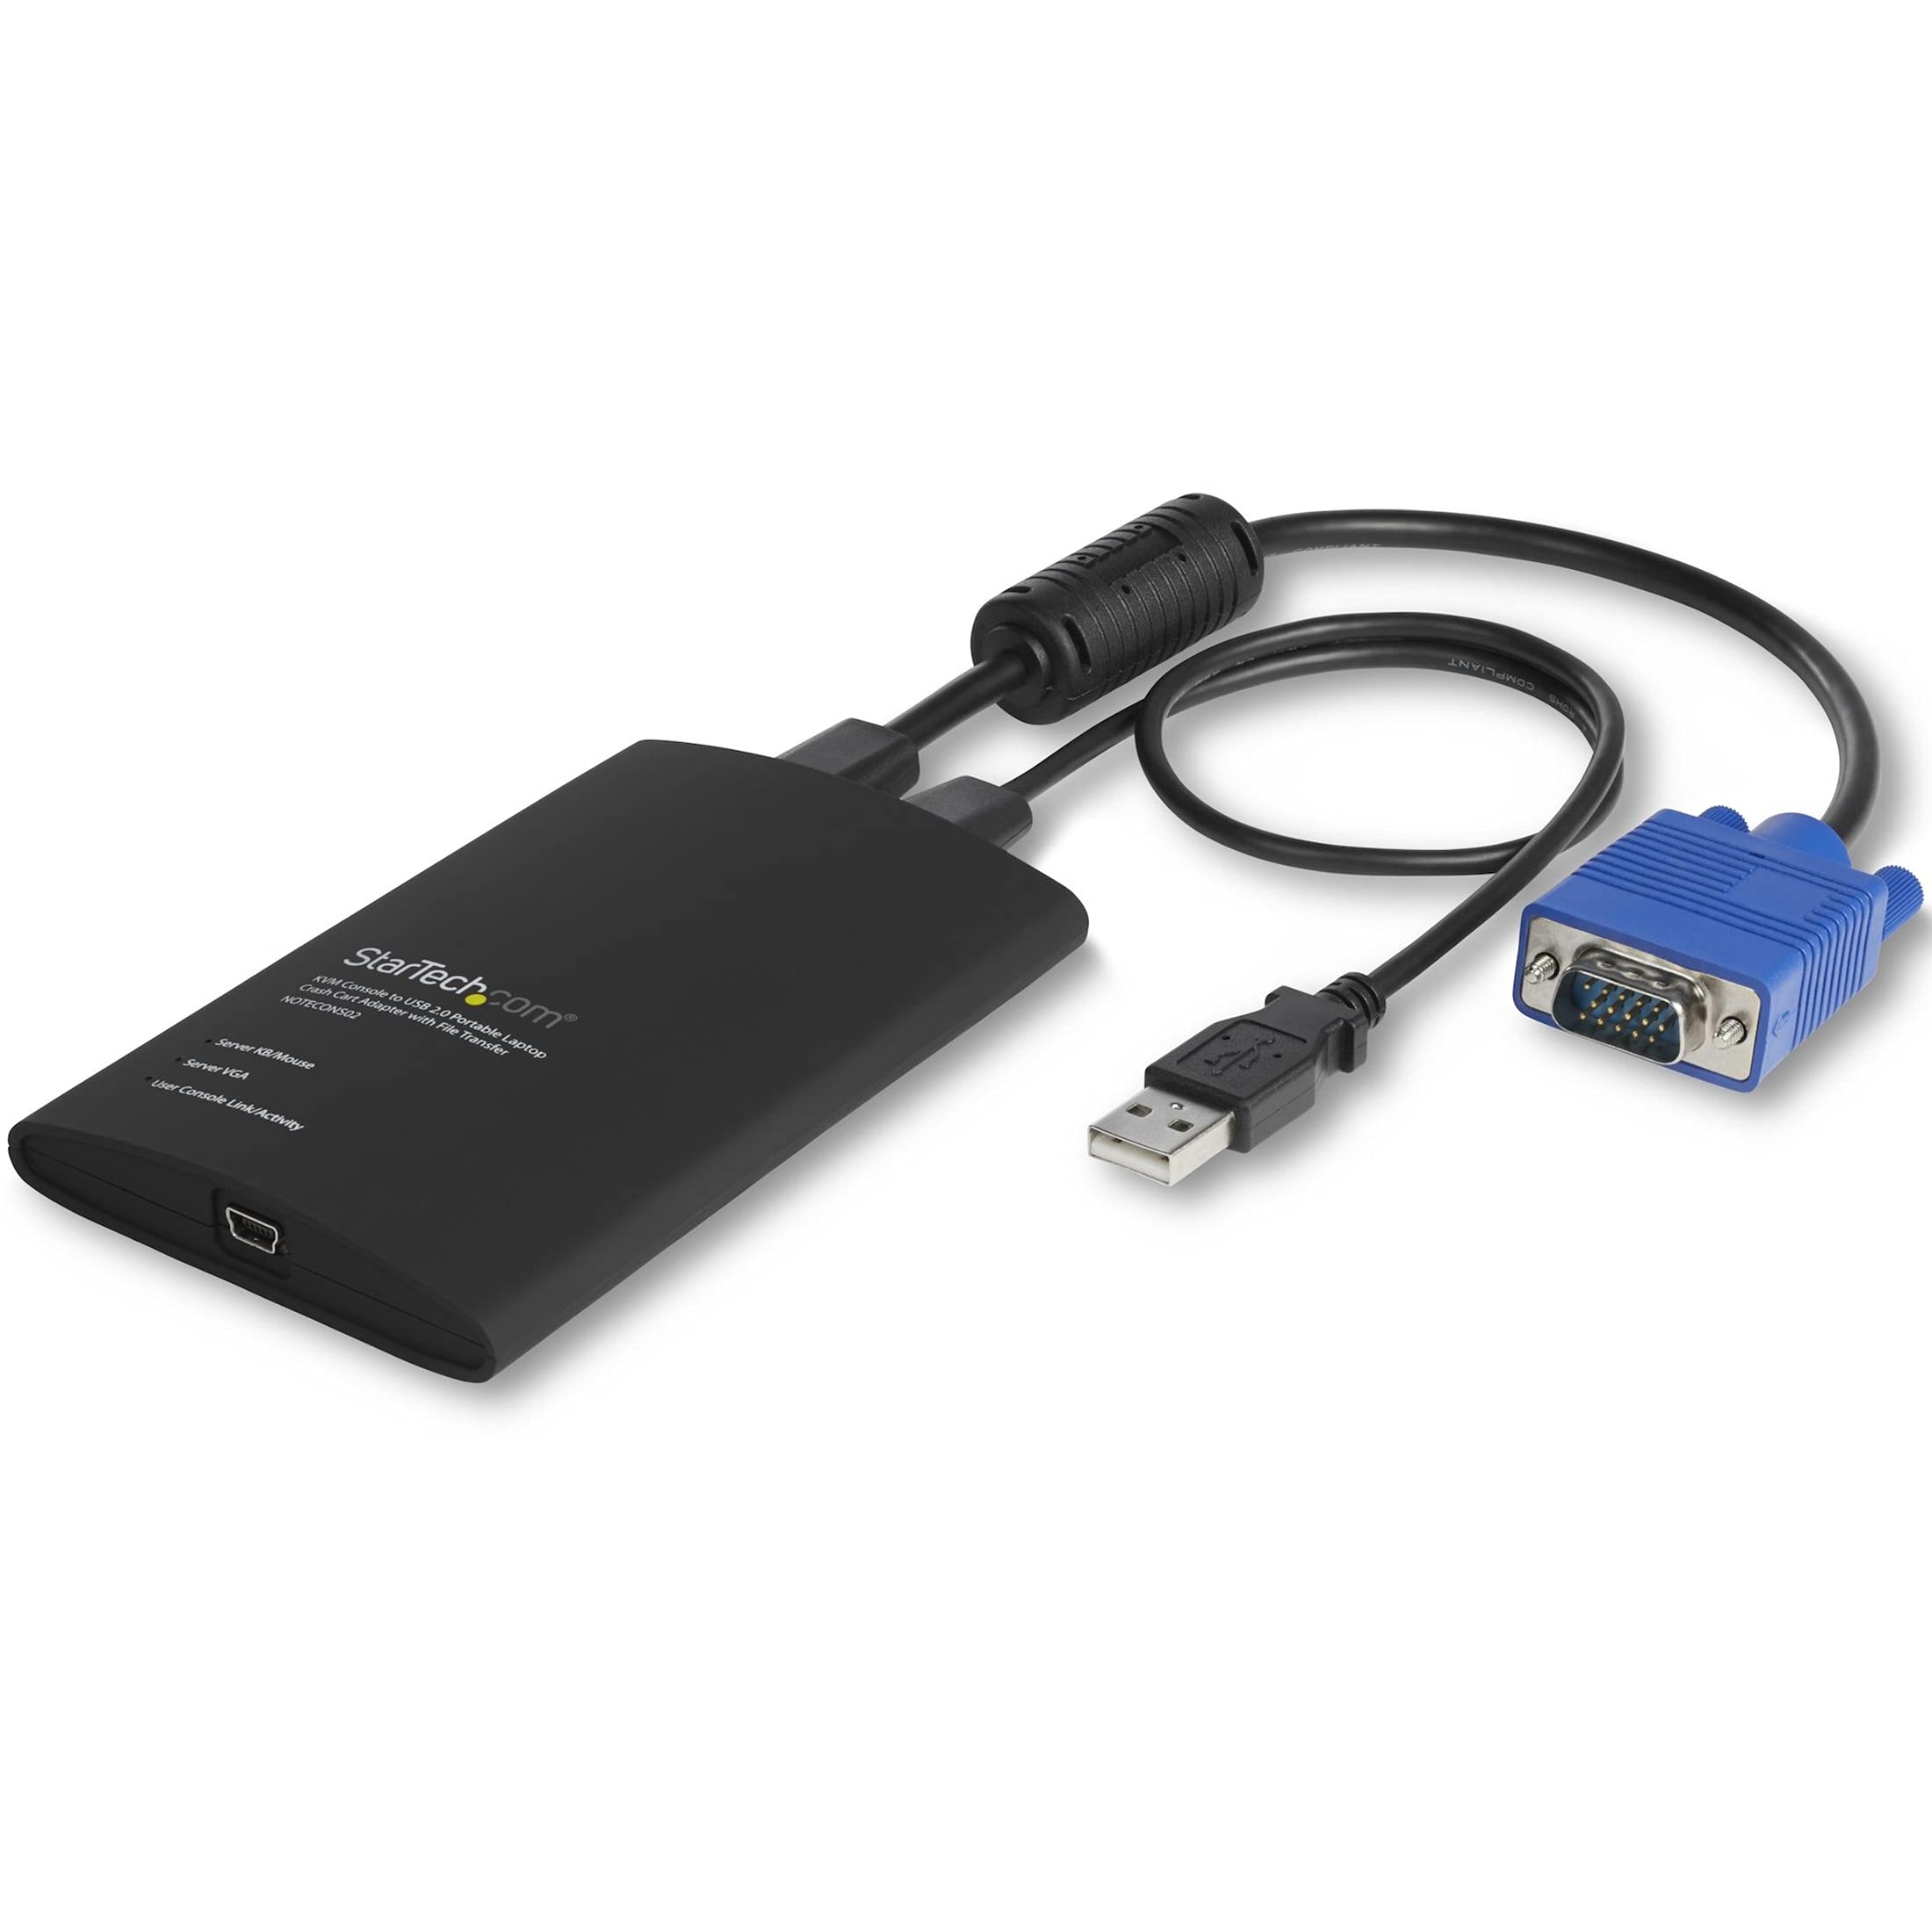 StarTech.com USB Crash Cart Adapter - File Transfer & Video - Portable Server Room Laptop to KVM Console Crash Cart (NOTECONS02), Black